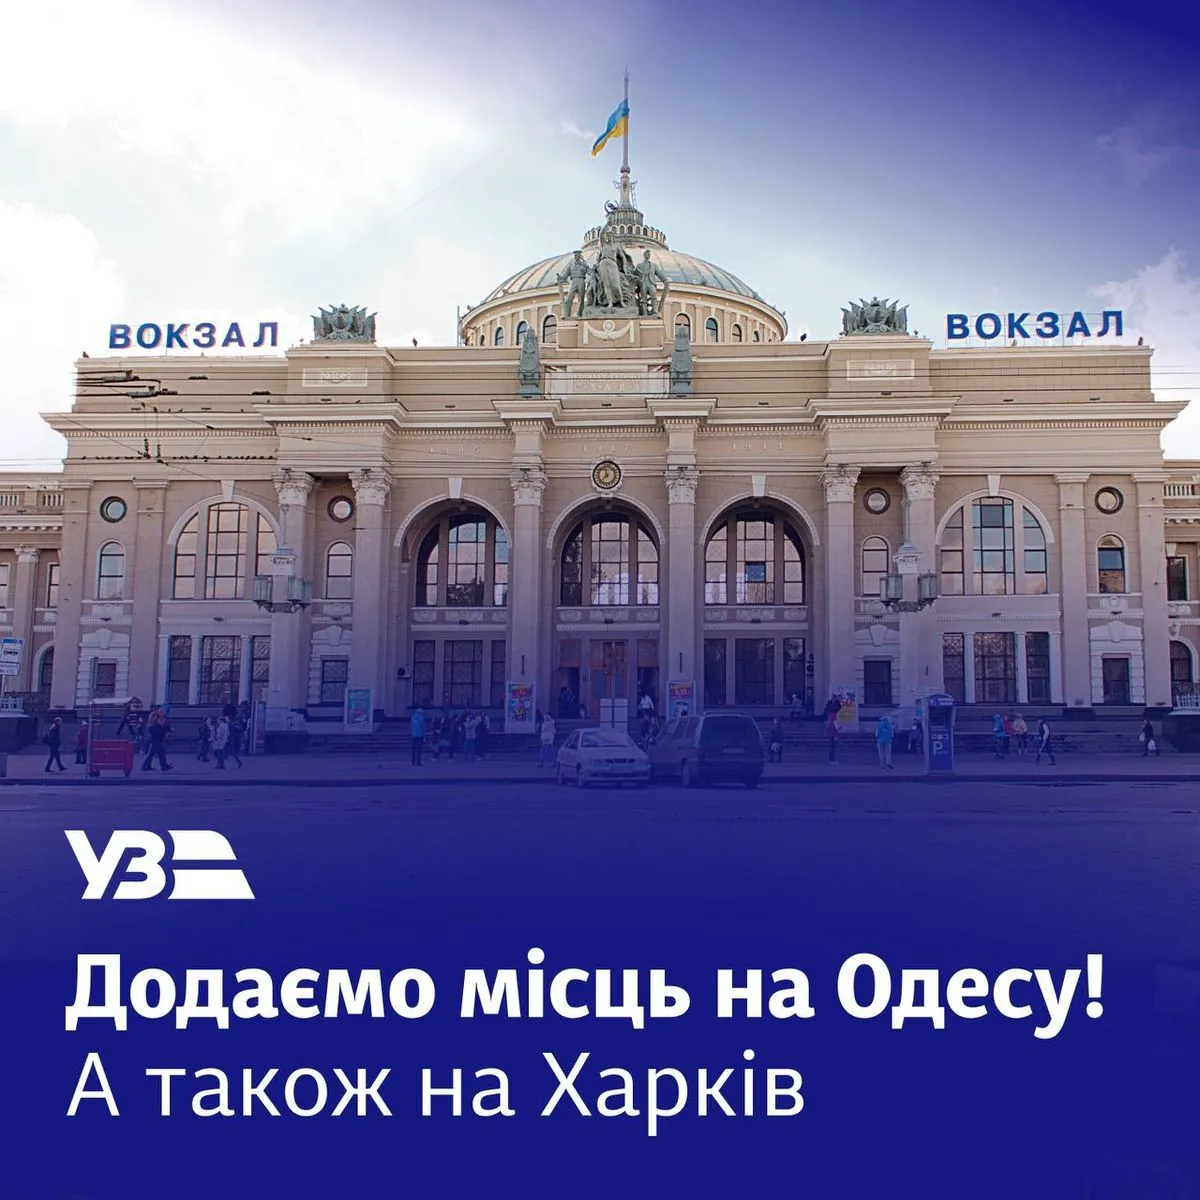 Поїздка до моря: в УЗ призначили додатковий поїзд Київ - Одеса